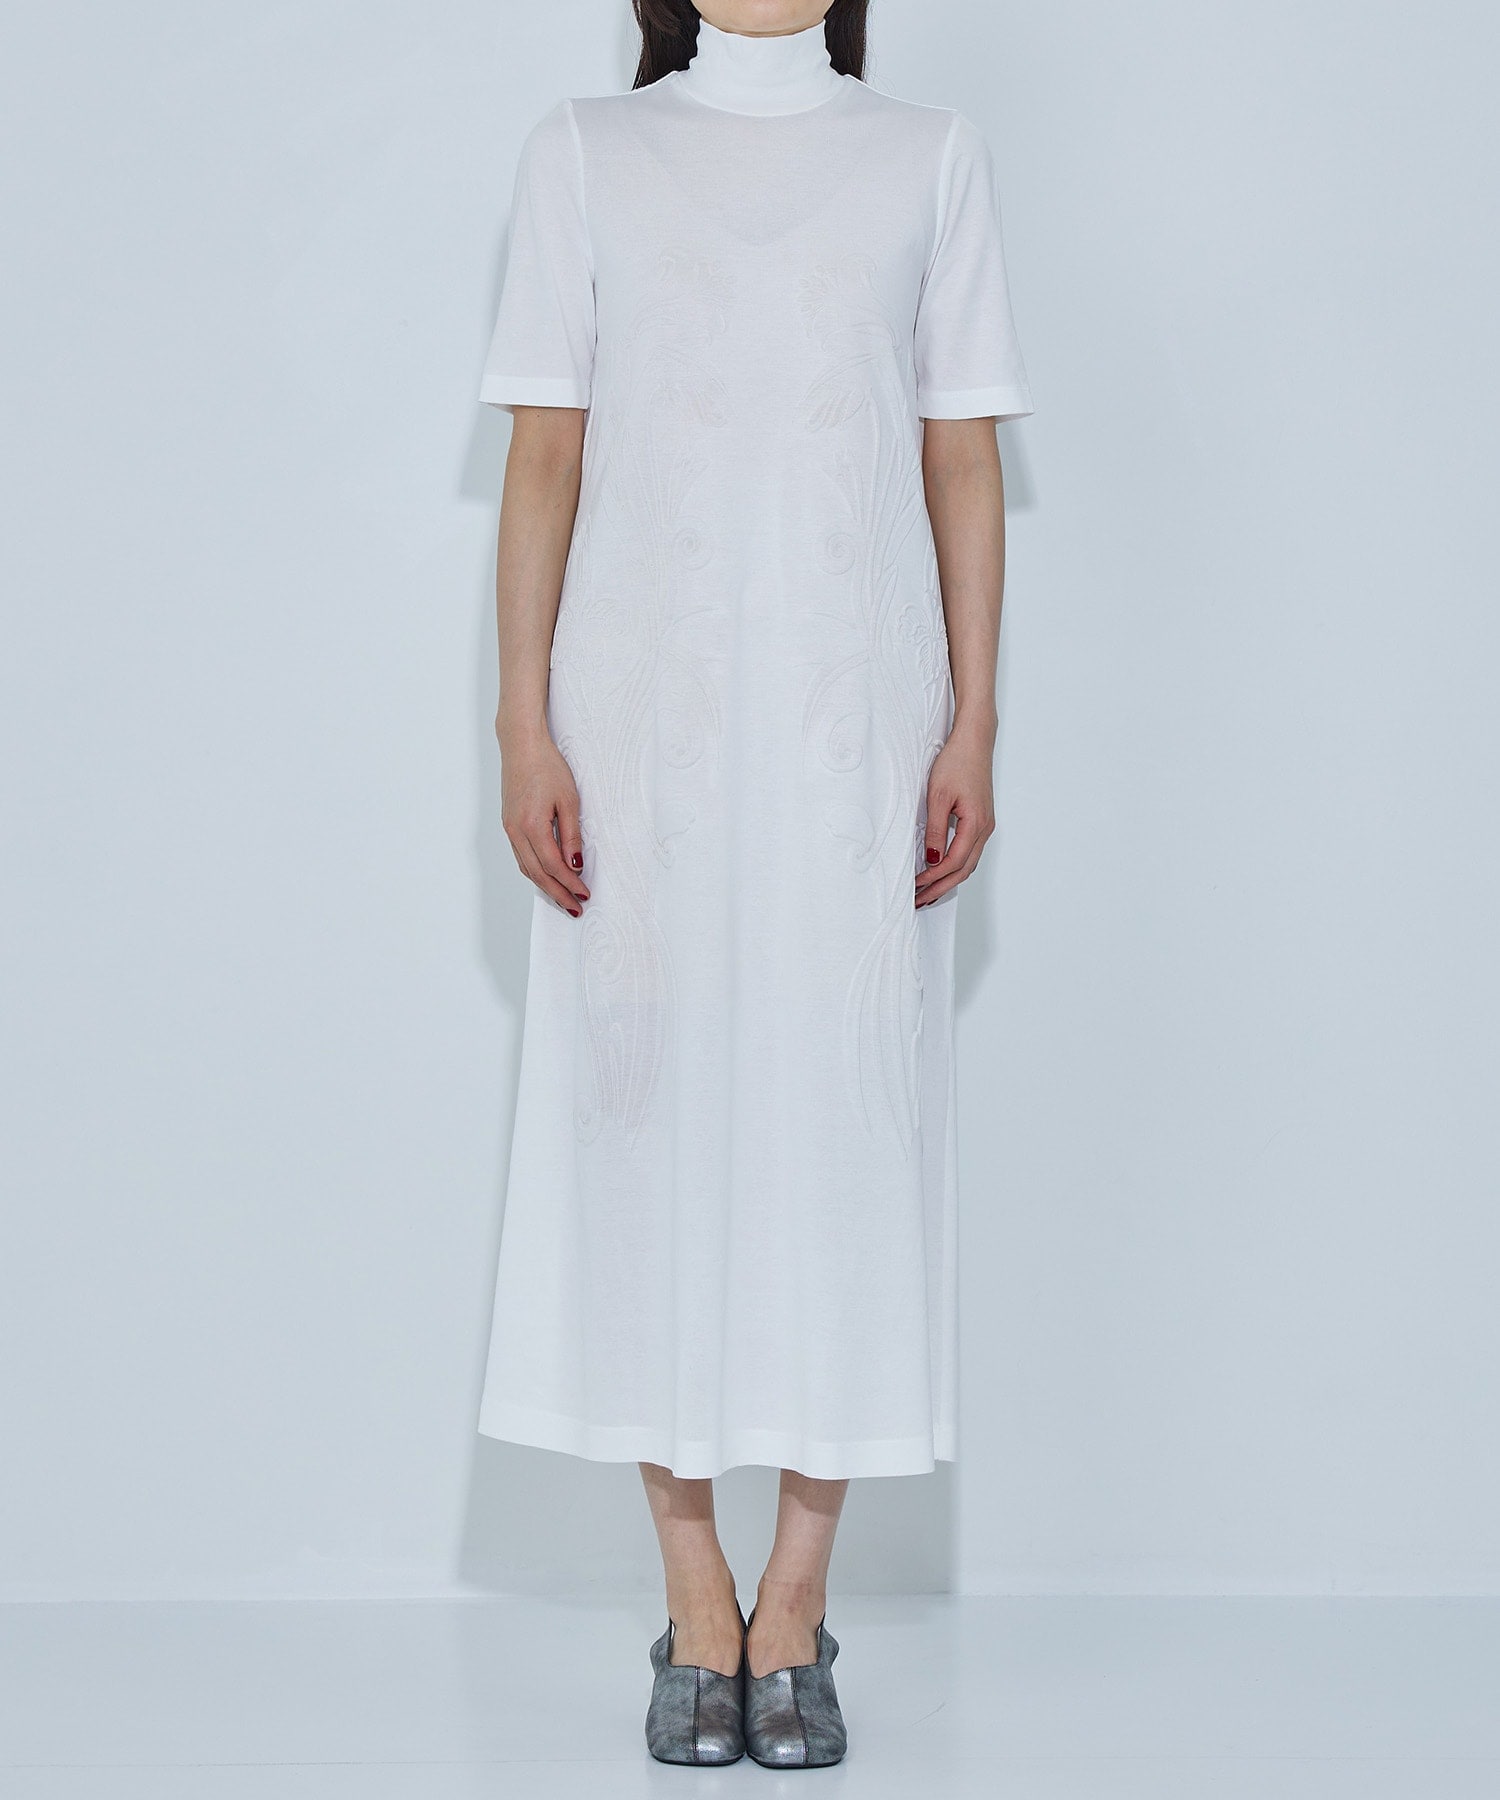 Floral Embossed Cotton Jersey A-Line Dress Mame Kurogouchi